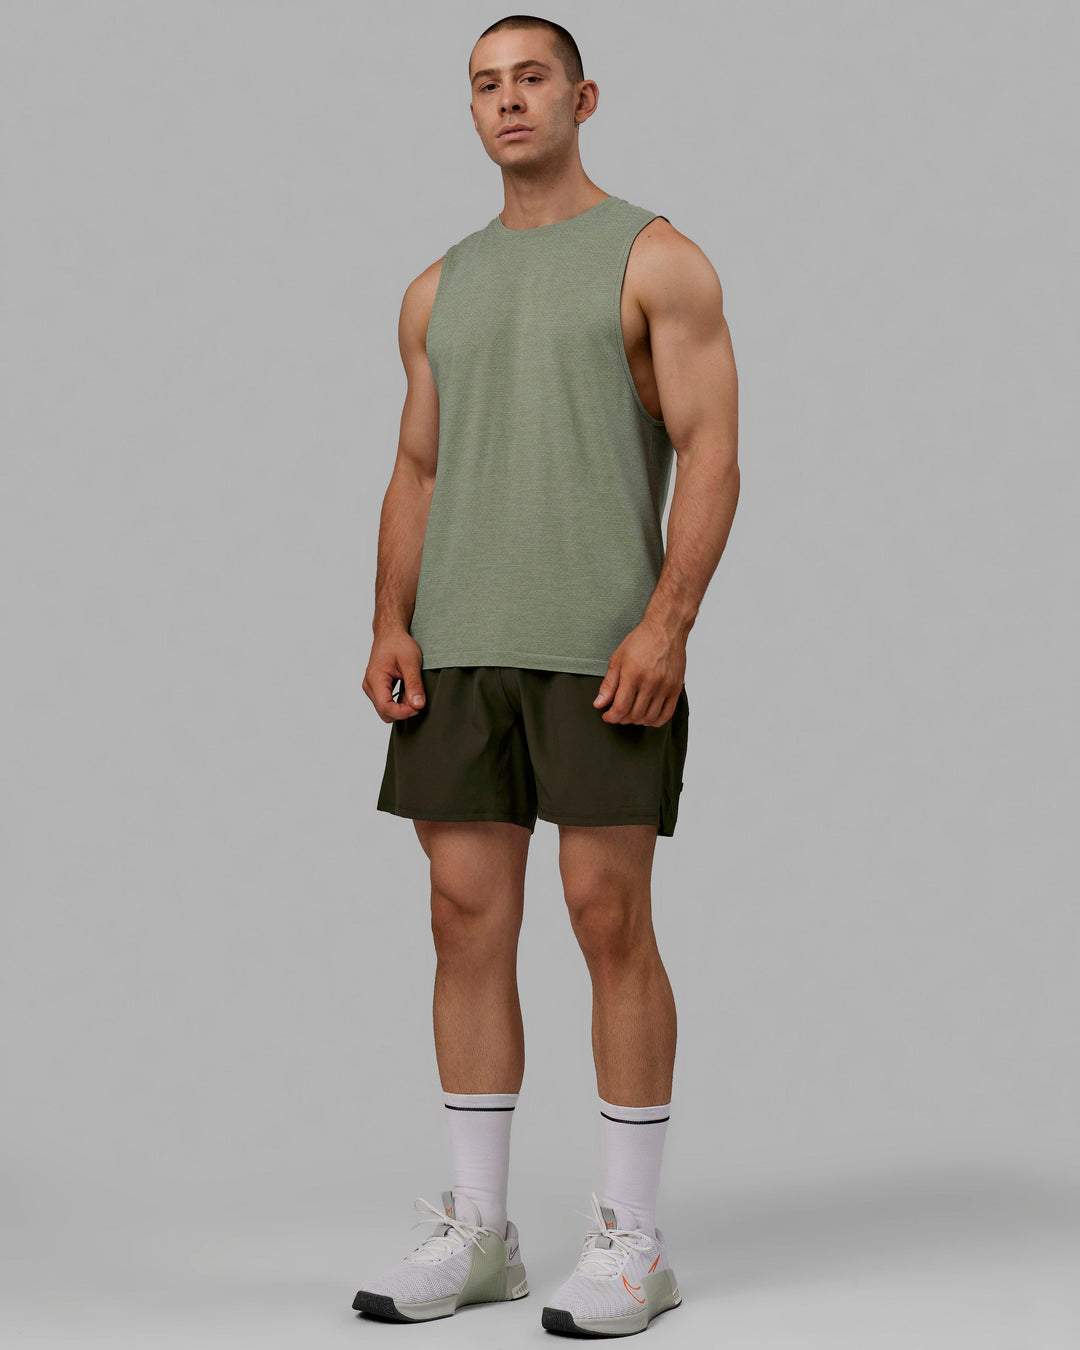 Man wearing AeroFLX+ Seamless Muscle Tank - Iceberg Green Marl